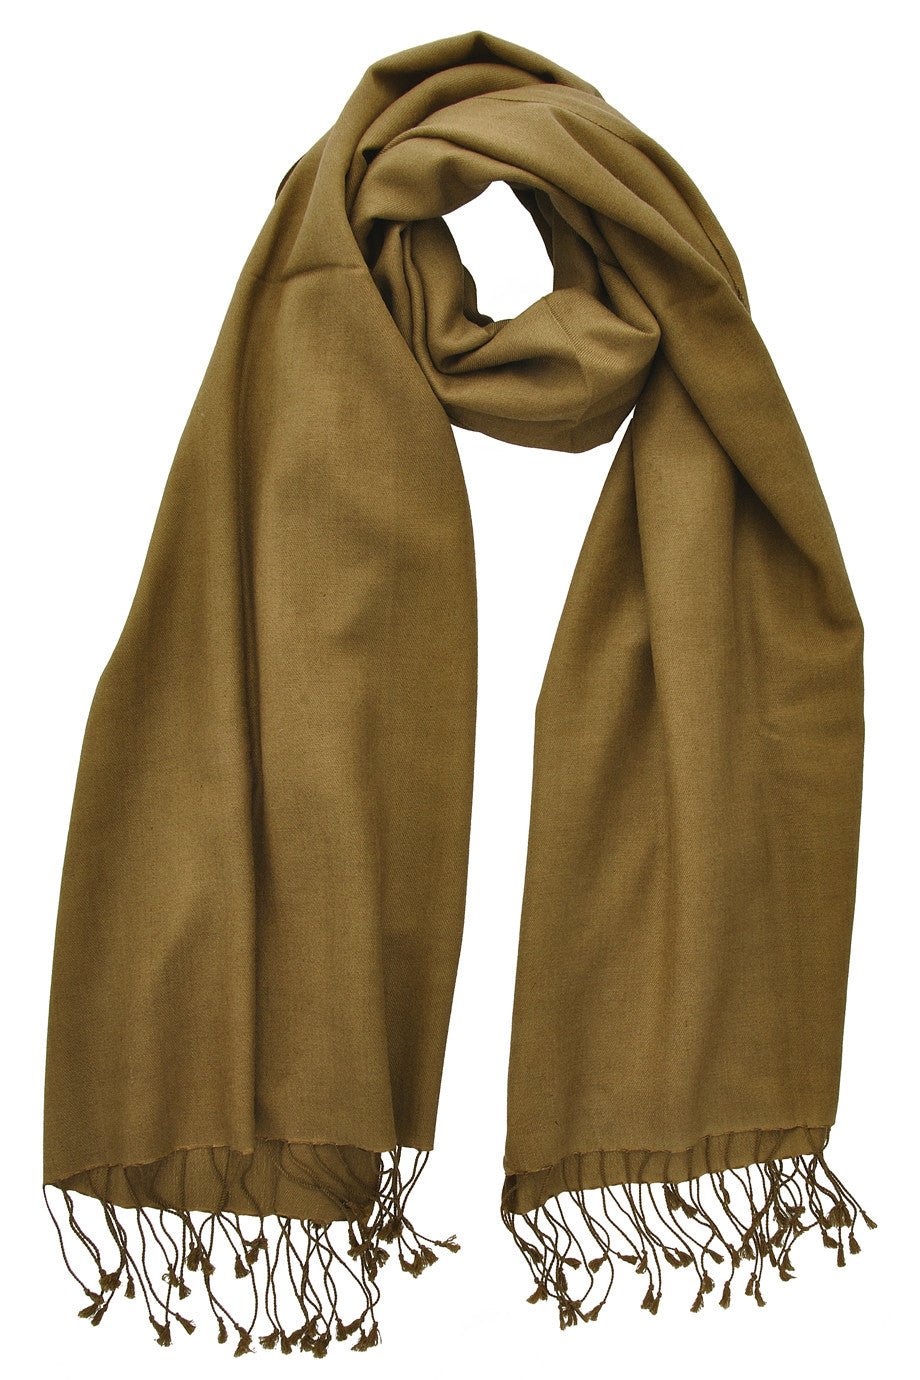 SHERPA Cashmere scarf